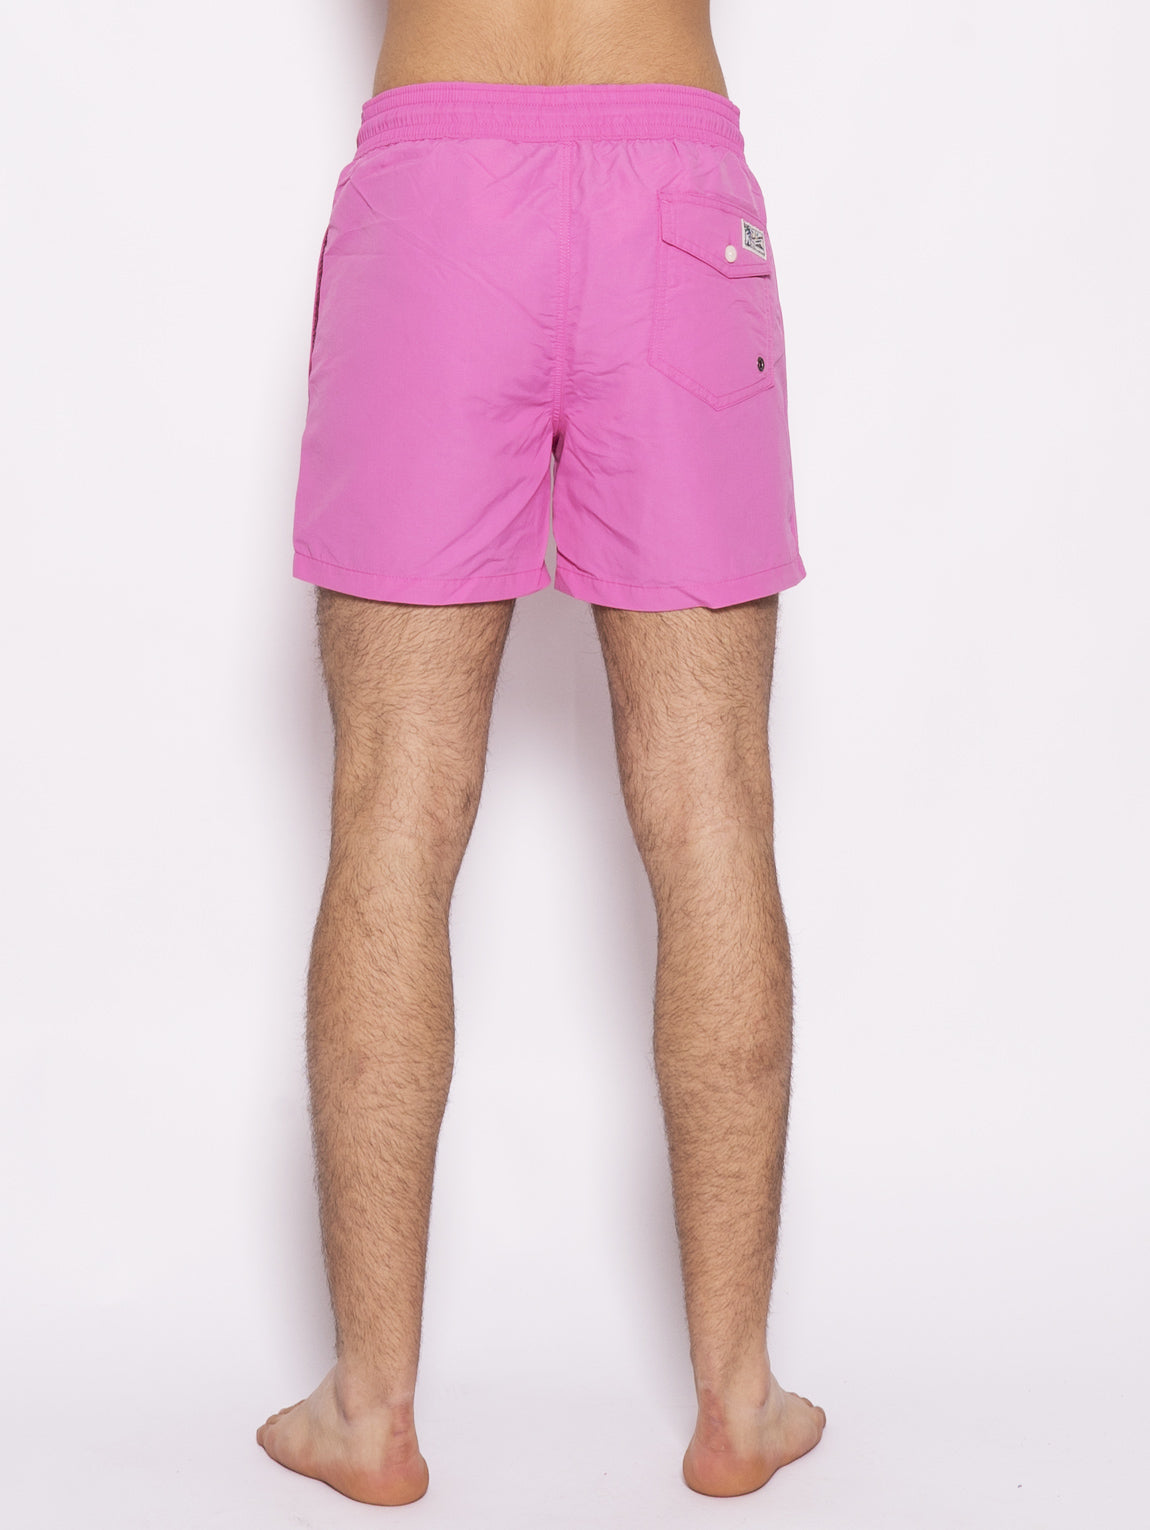 Pink swim shorts